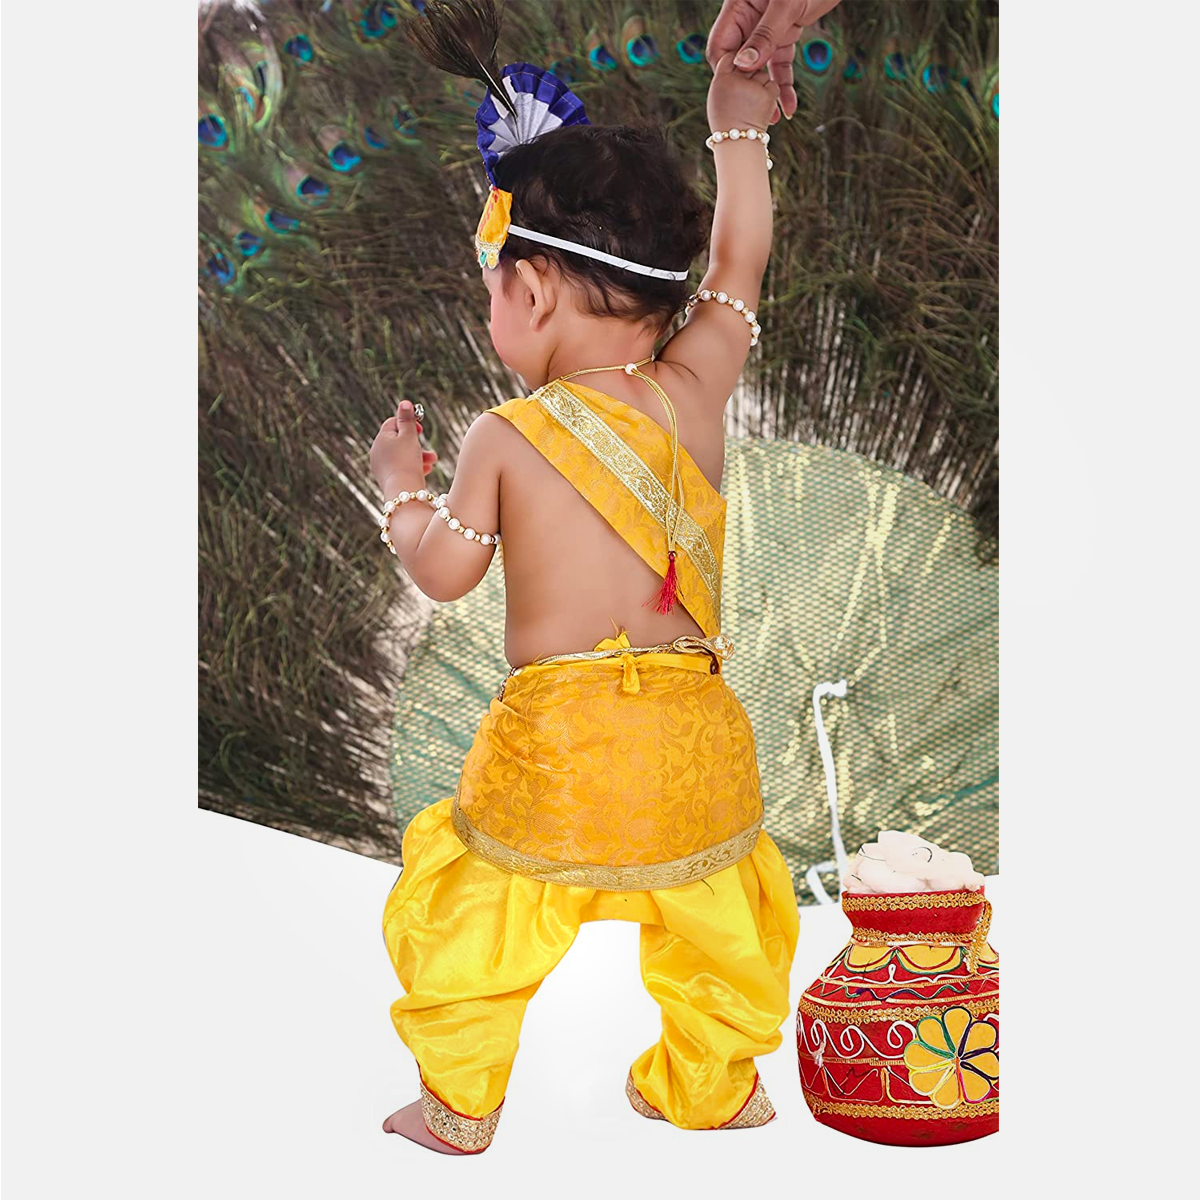 A Krishna devotee boy who wear tulsi mala and indian traditional dress